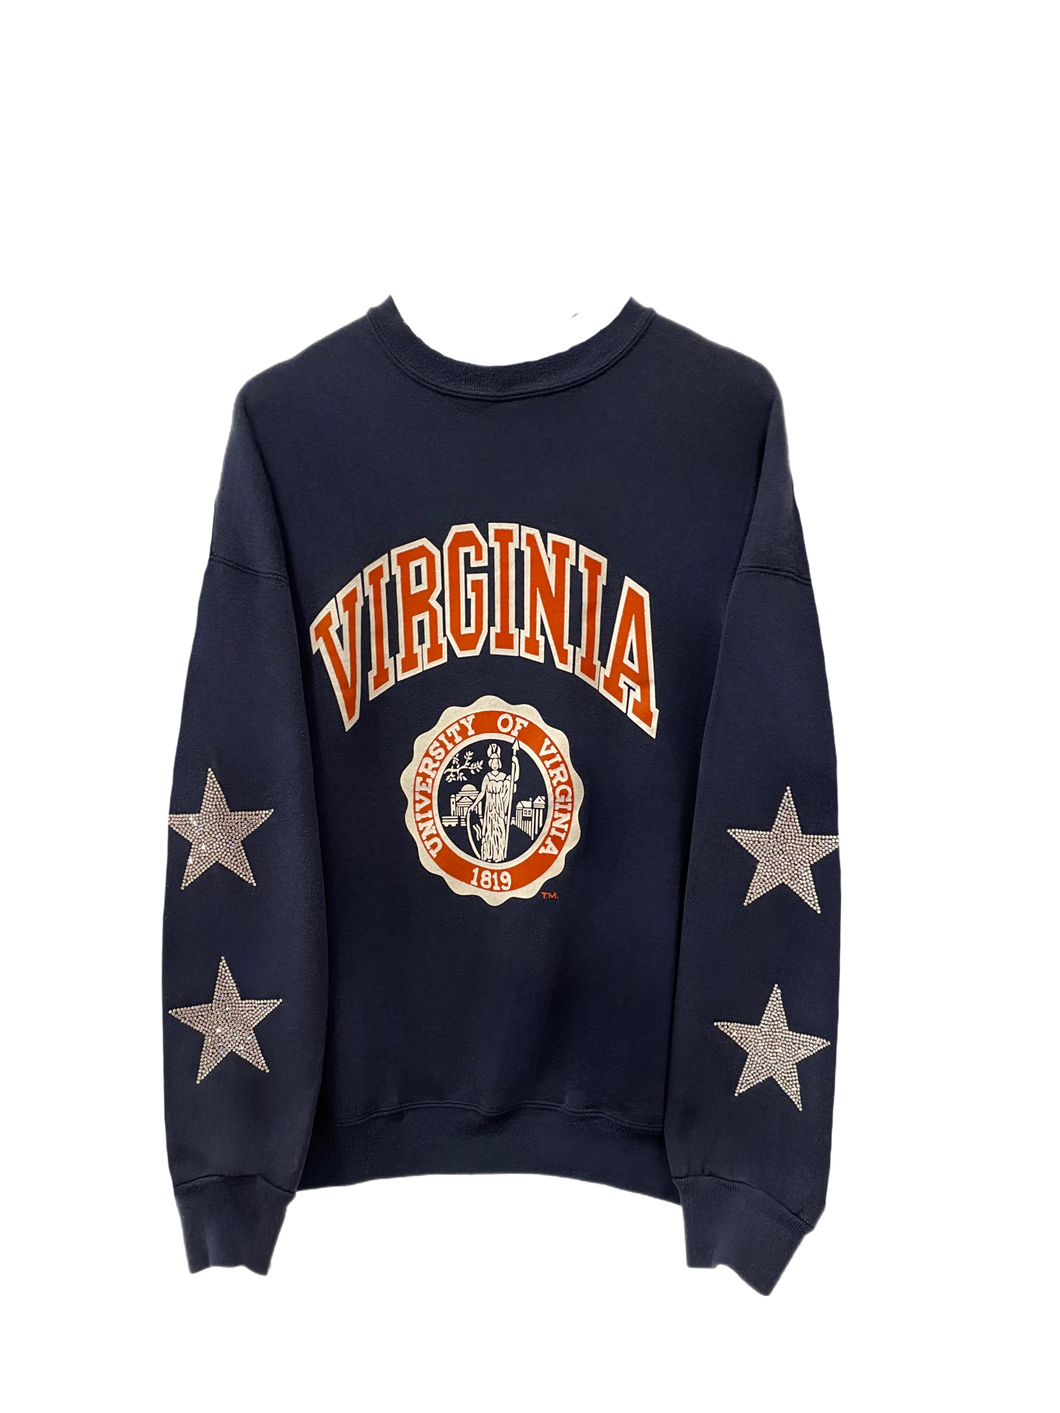 University of Virginia, UVA One of A Kind Vintage Sweatshirt with Crystal Star Design